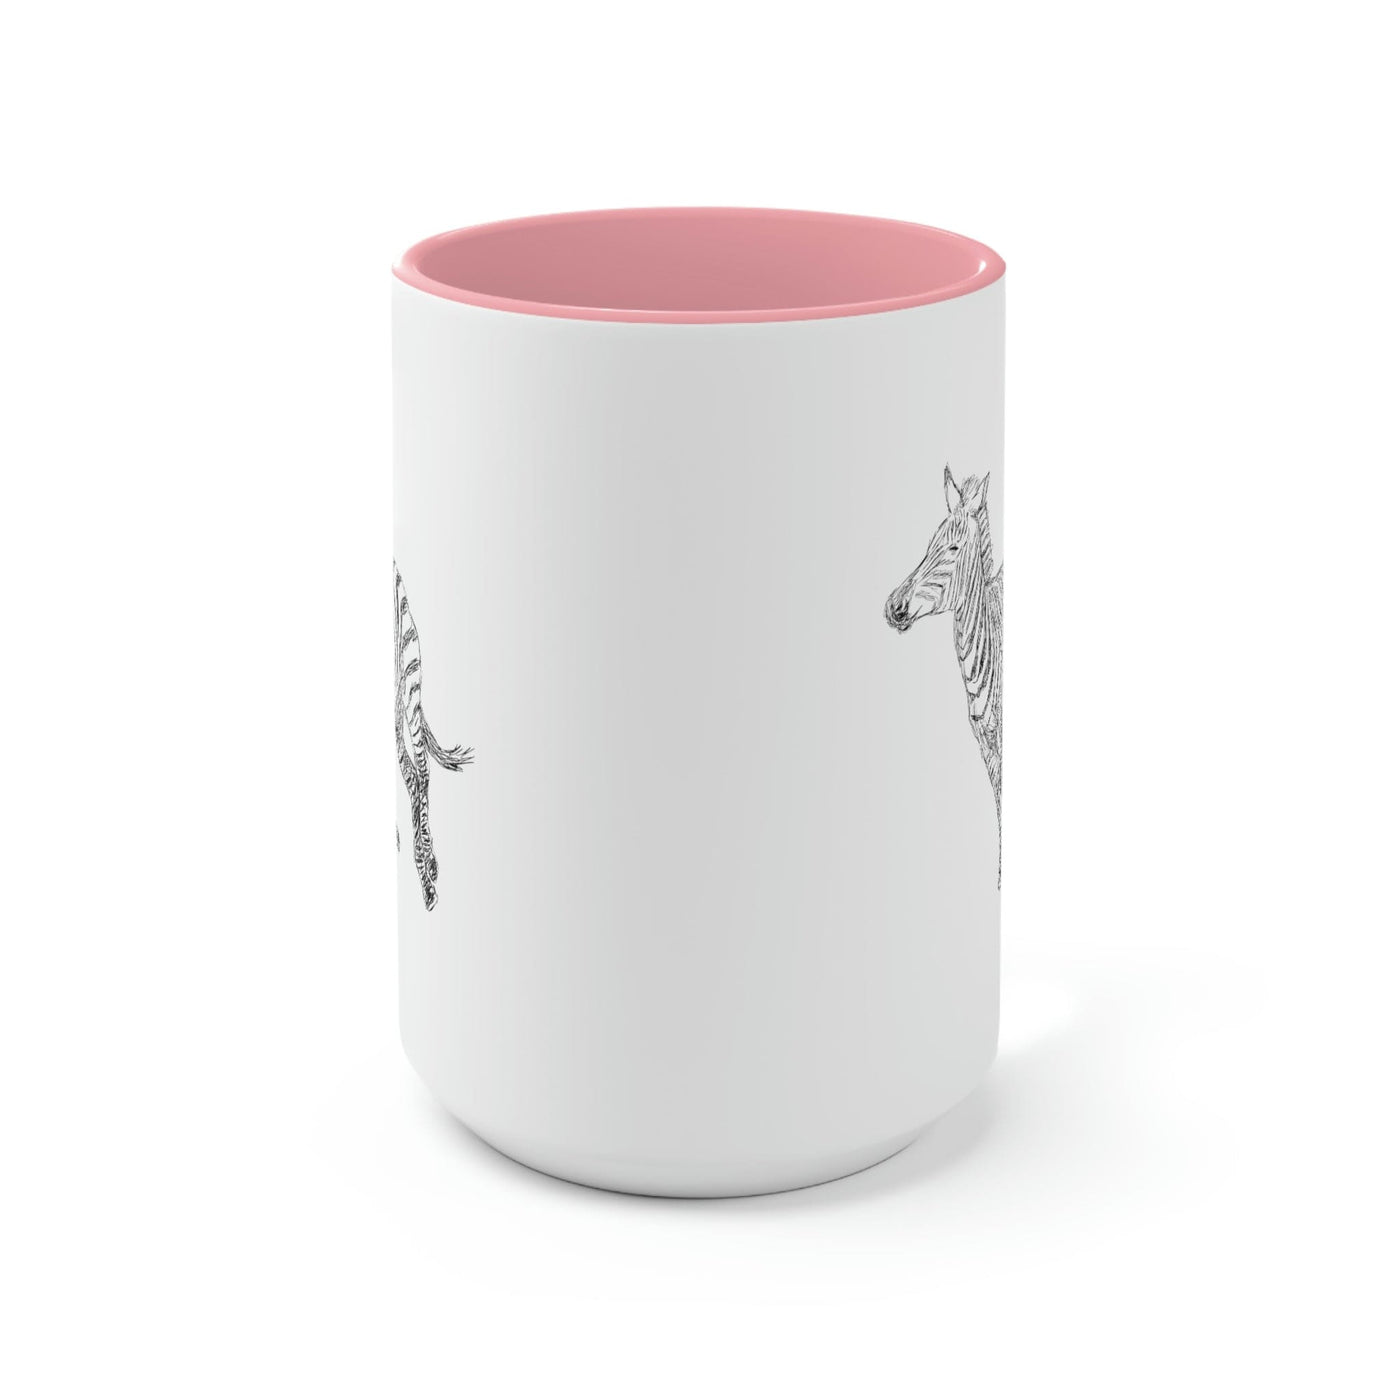 Two-tone Accent Ceramic Coffee Mug 15oz Galloping Zebra Line Art Drawing Print